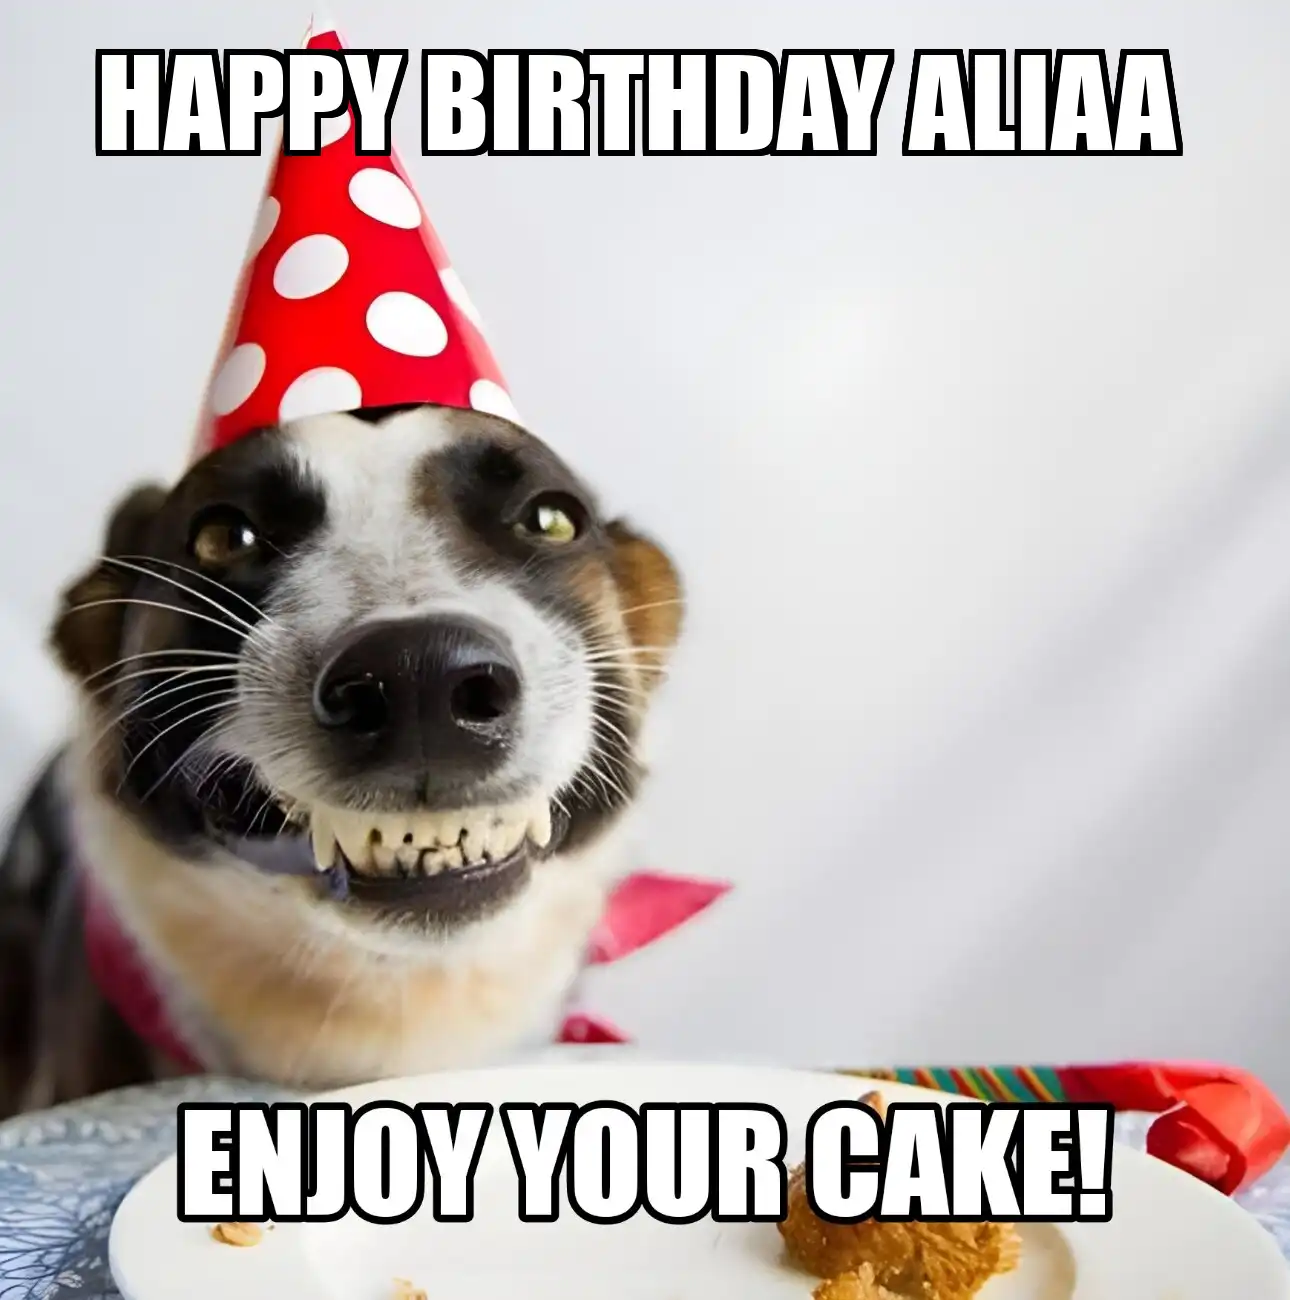 Happy Birthday Aliaa Enjoy Your Cake Dog Meme